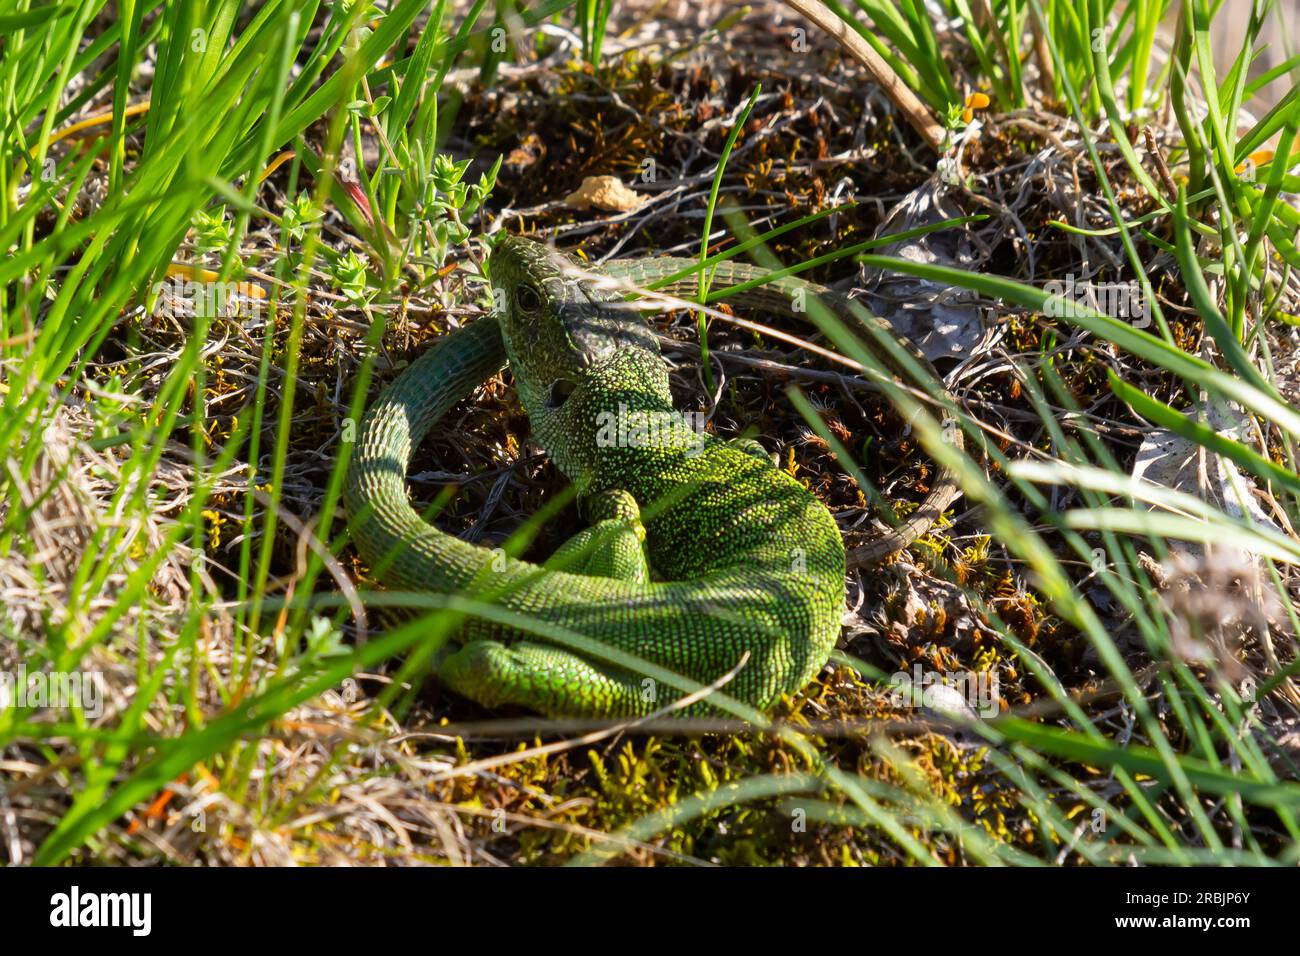 La lucertola verde europea Lacerta viridis emerge dall'erba esponendo i suoi bei colori. Foto Stock